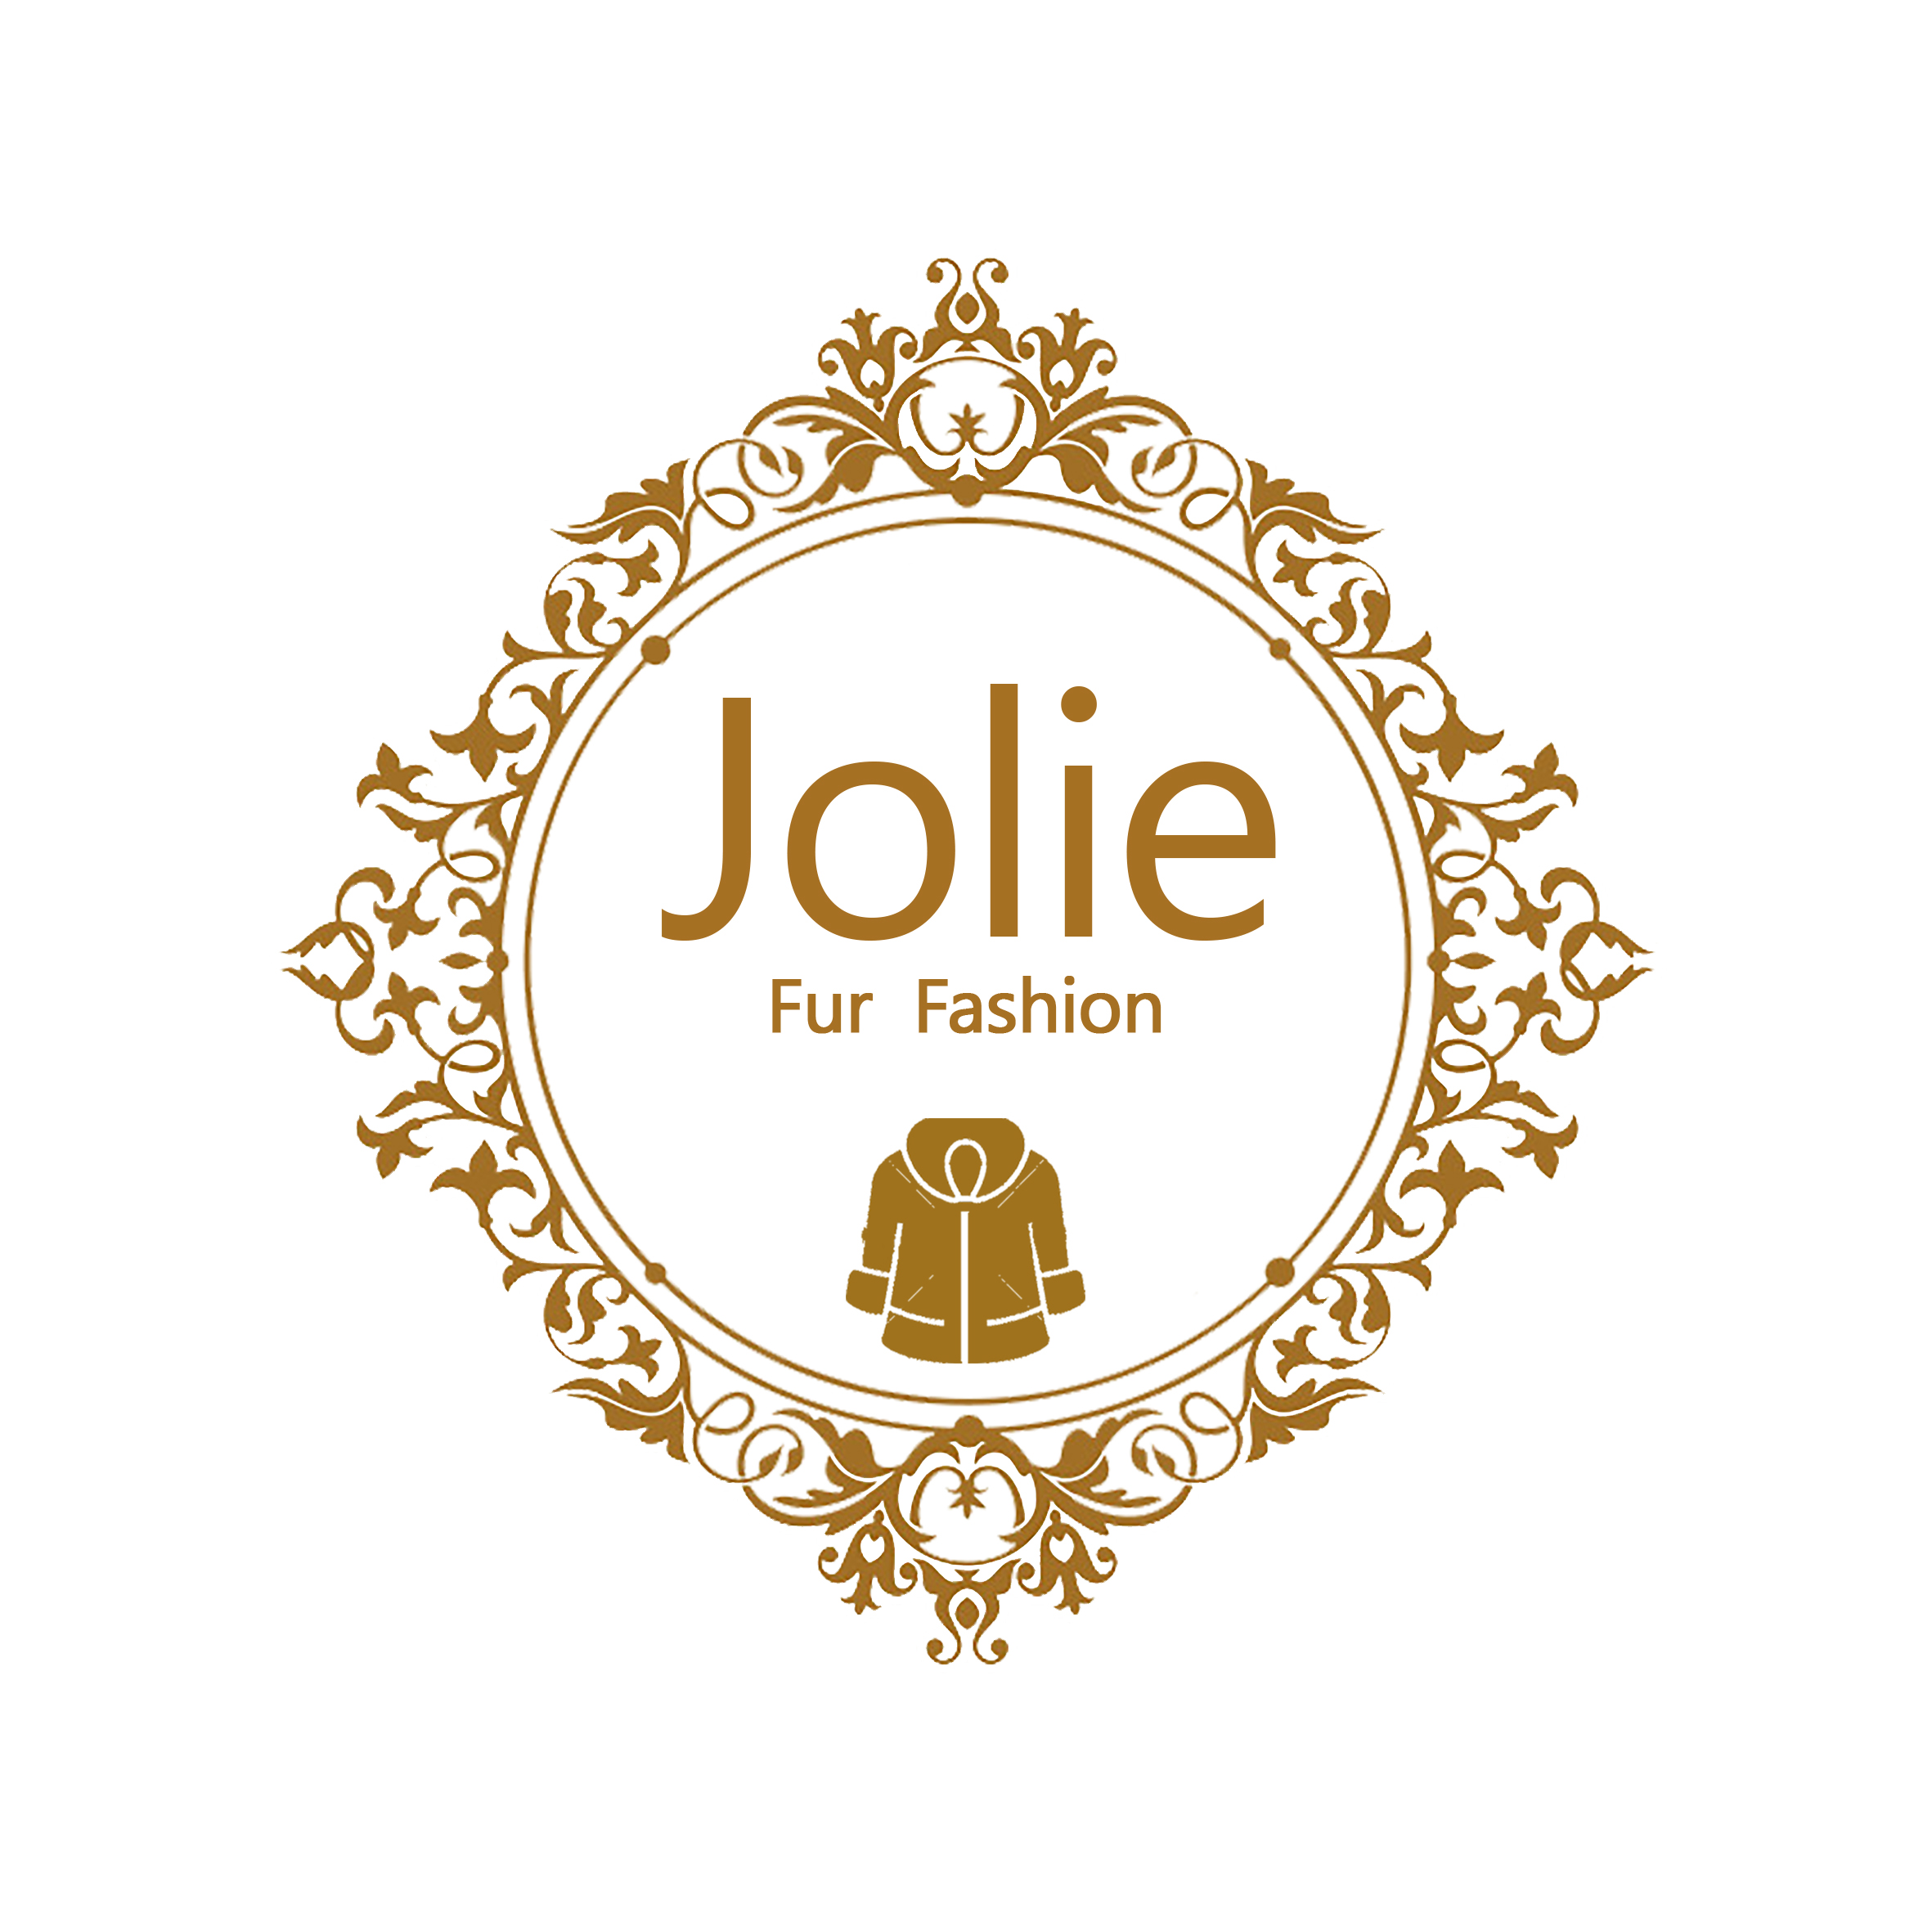 Jolie Fur Fashion